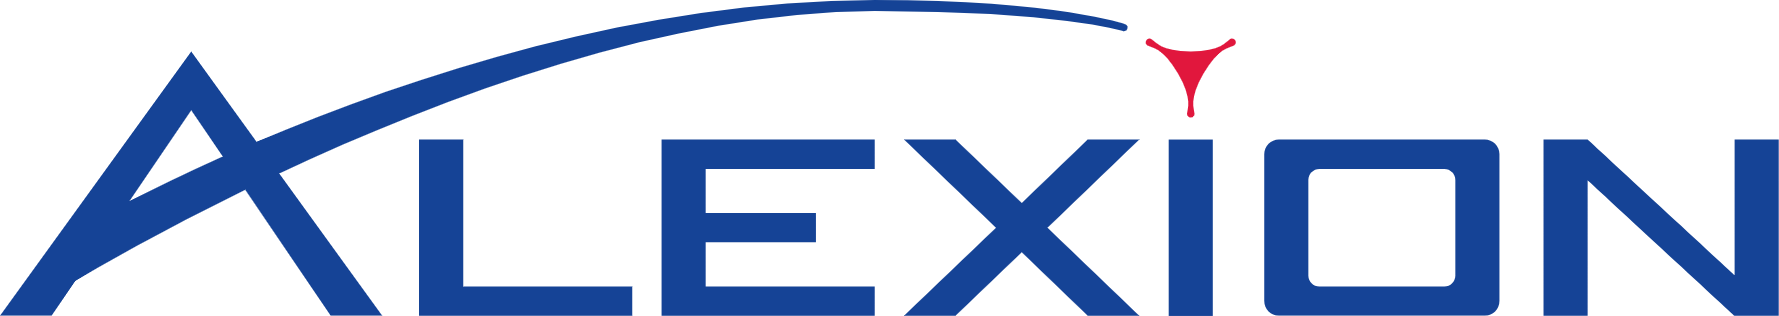 Alexion Pharmaceuticals logo (transparent PNG)